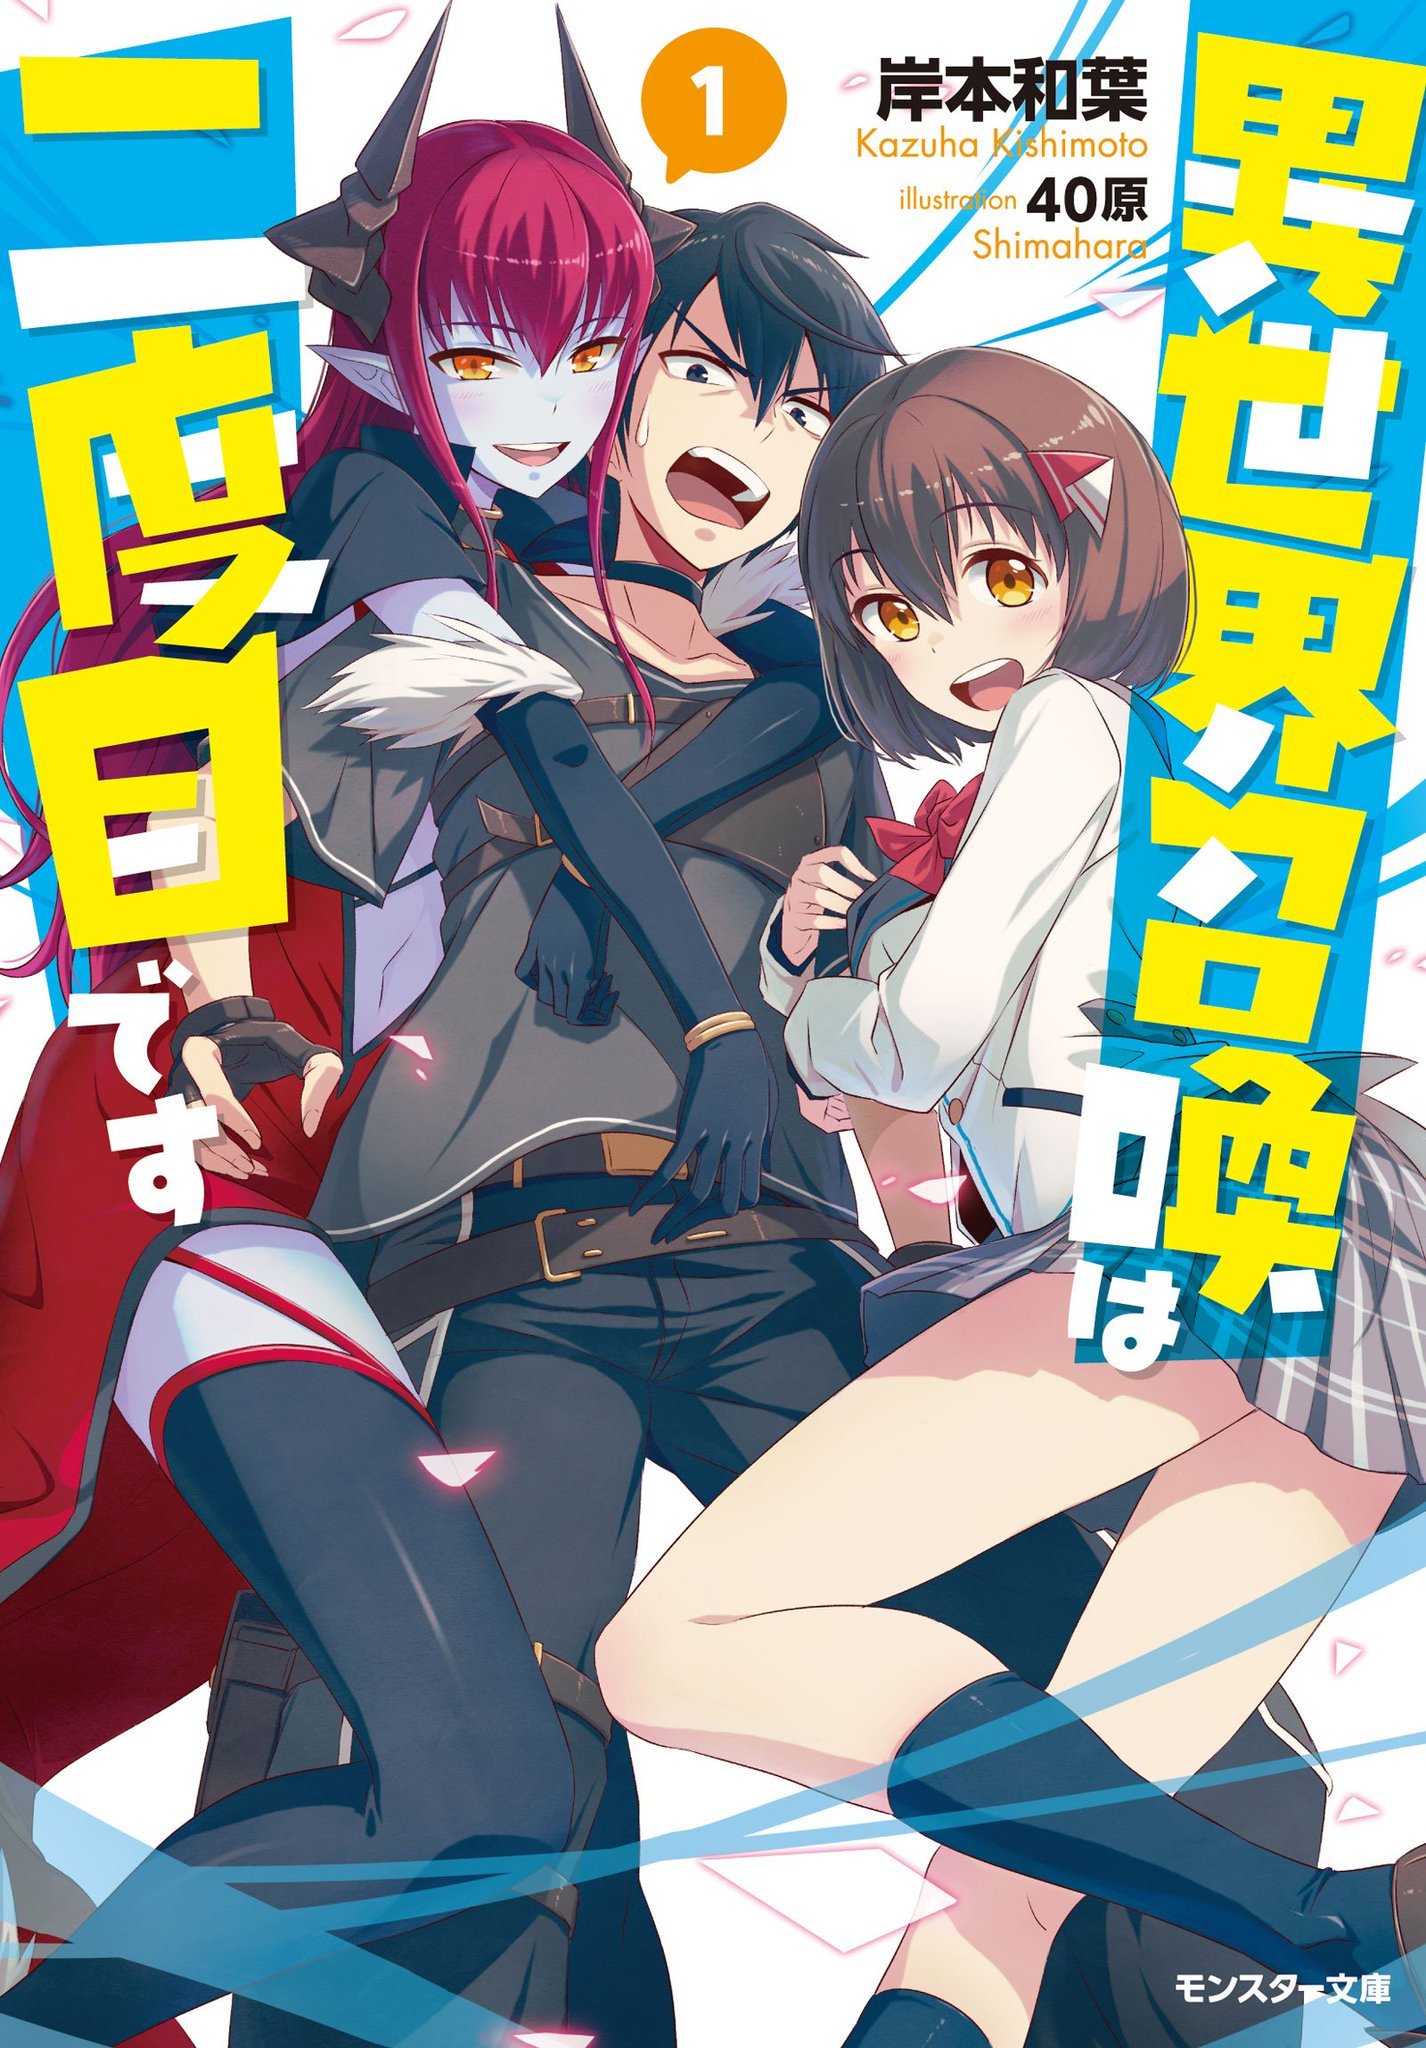 Isekai Shoukan wa Nidome Desu - Light novel isekai tem anime anunciado